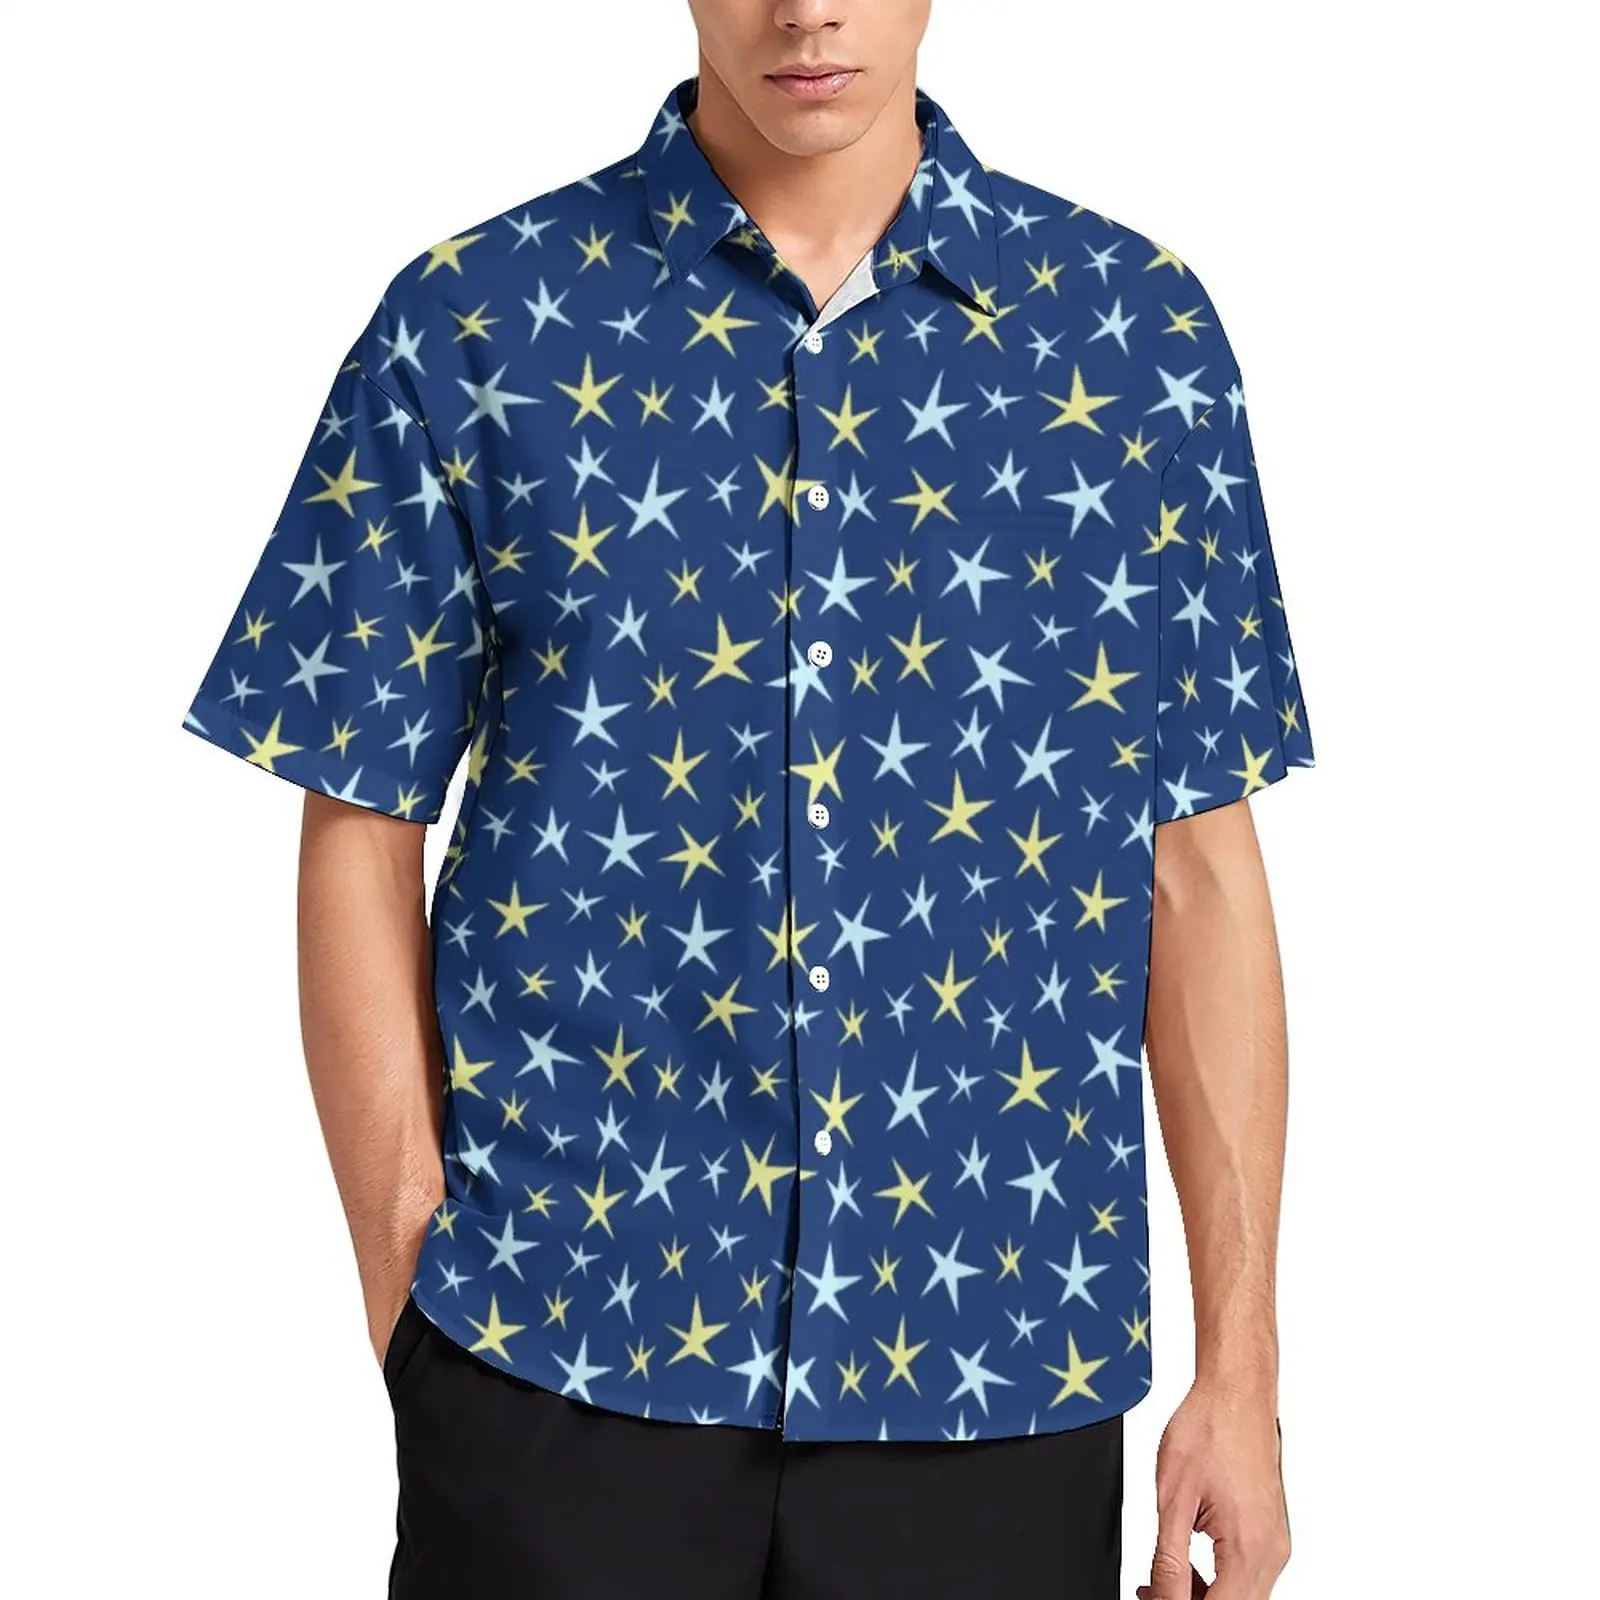 

Stars Space Beach Shirt Retro 1960s Geometric Summer Casual Shirts Male Retro Blouses Short Sleeve Graphic Clothing Big Size 4XL